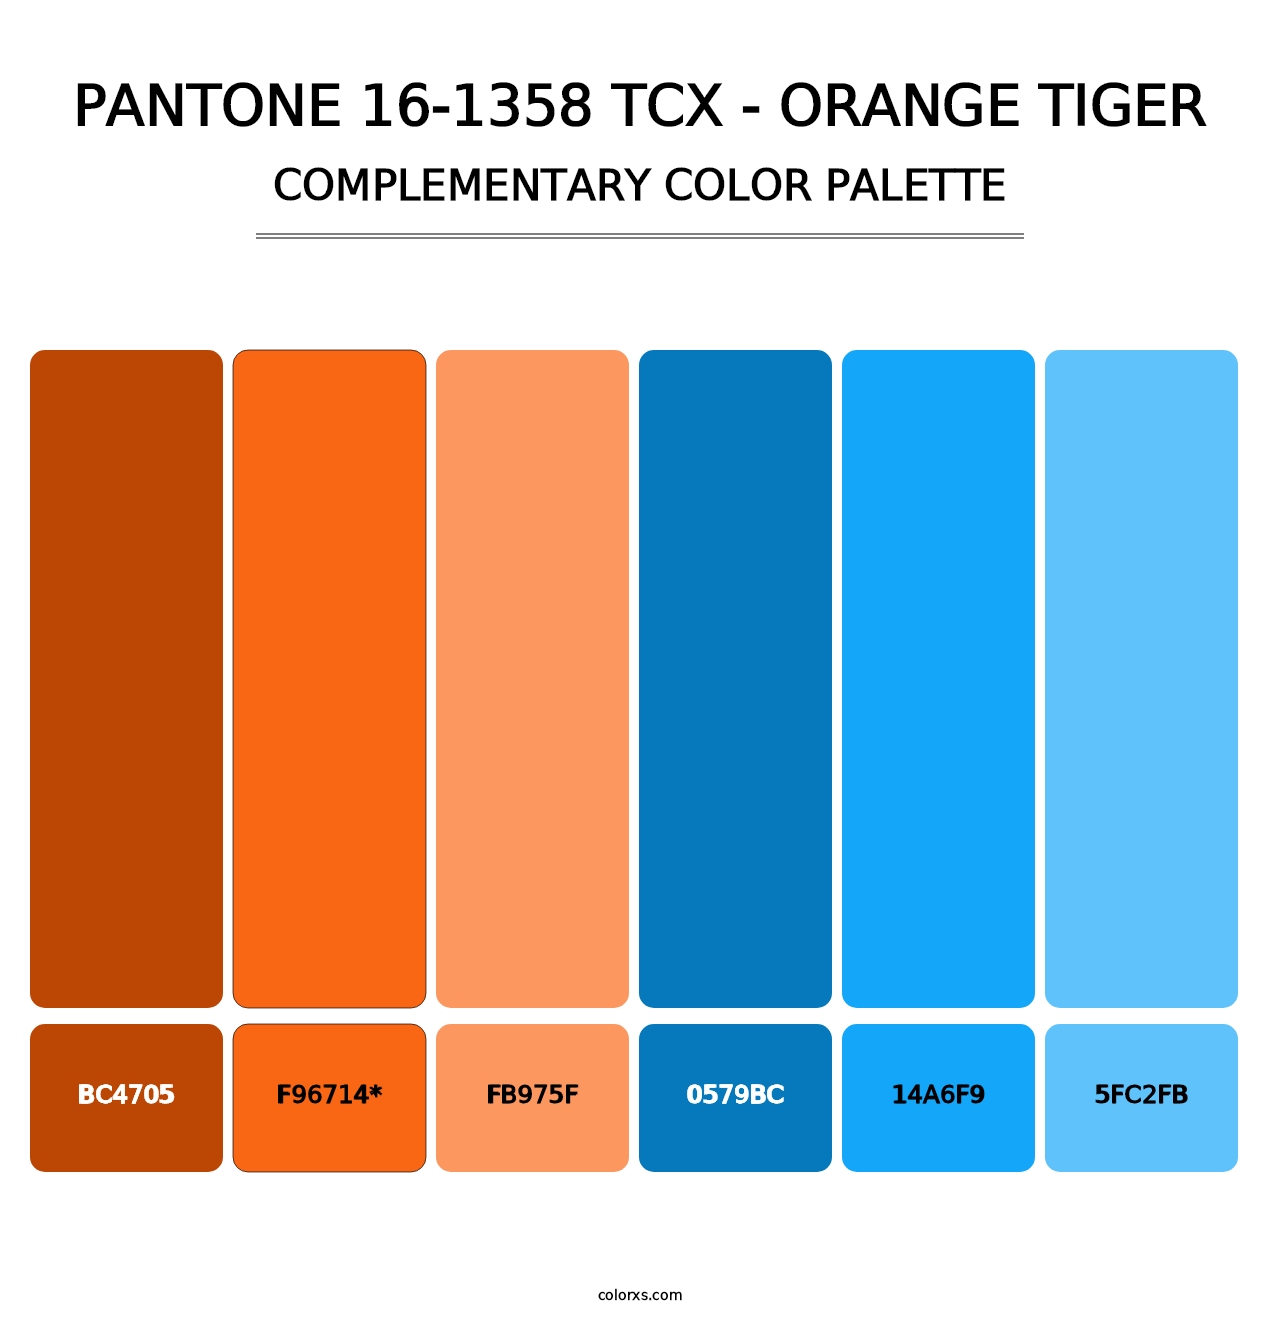 PANTONE 16-1358 TCX - Orange Tiger - Complementary Color Palette